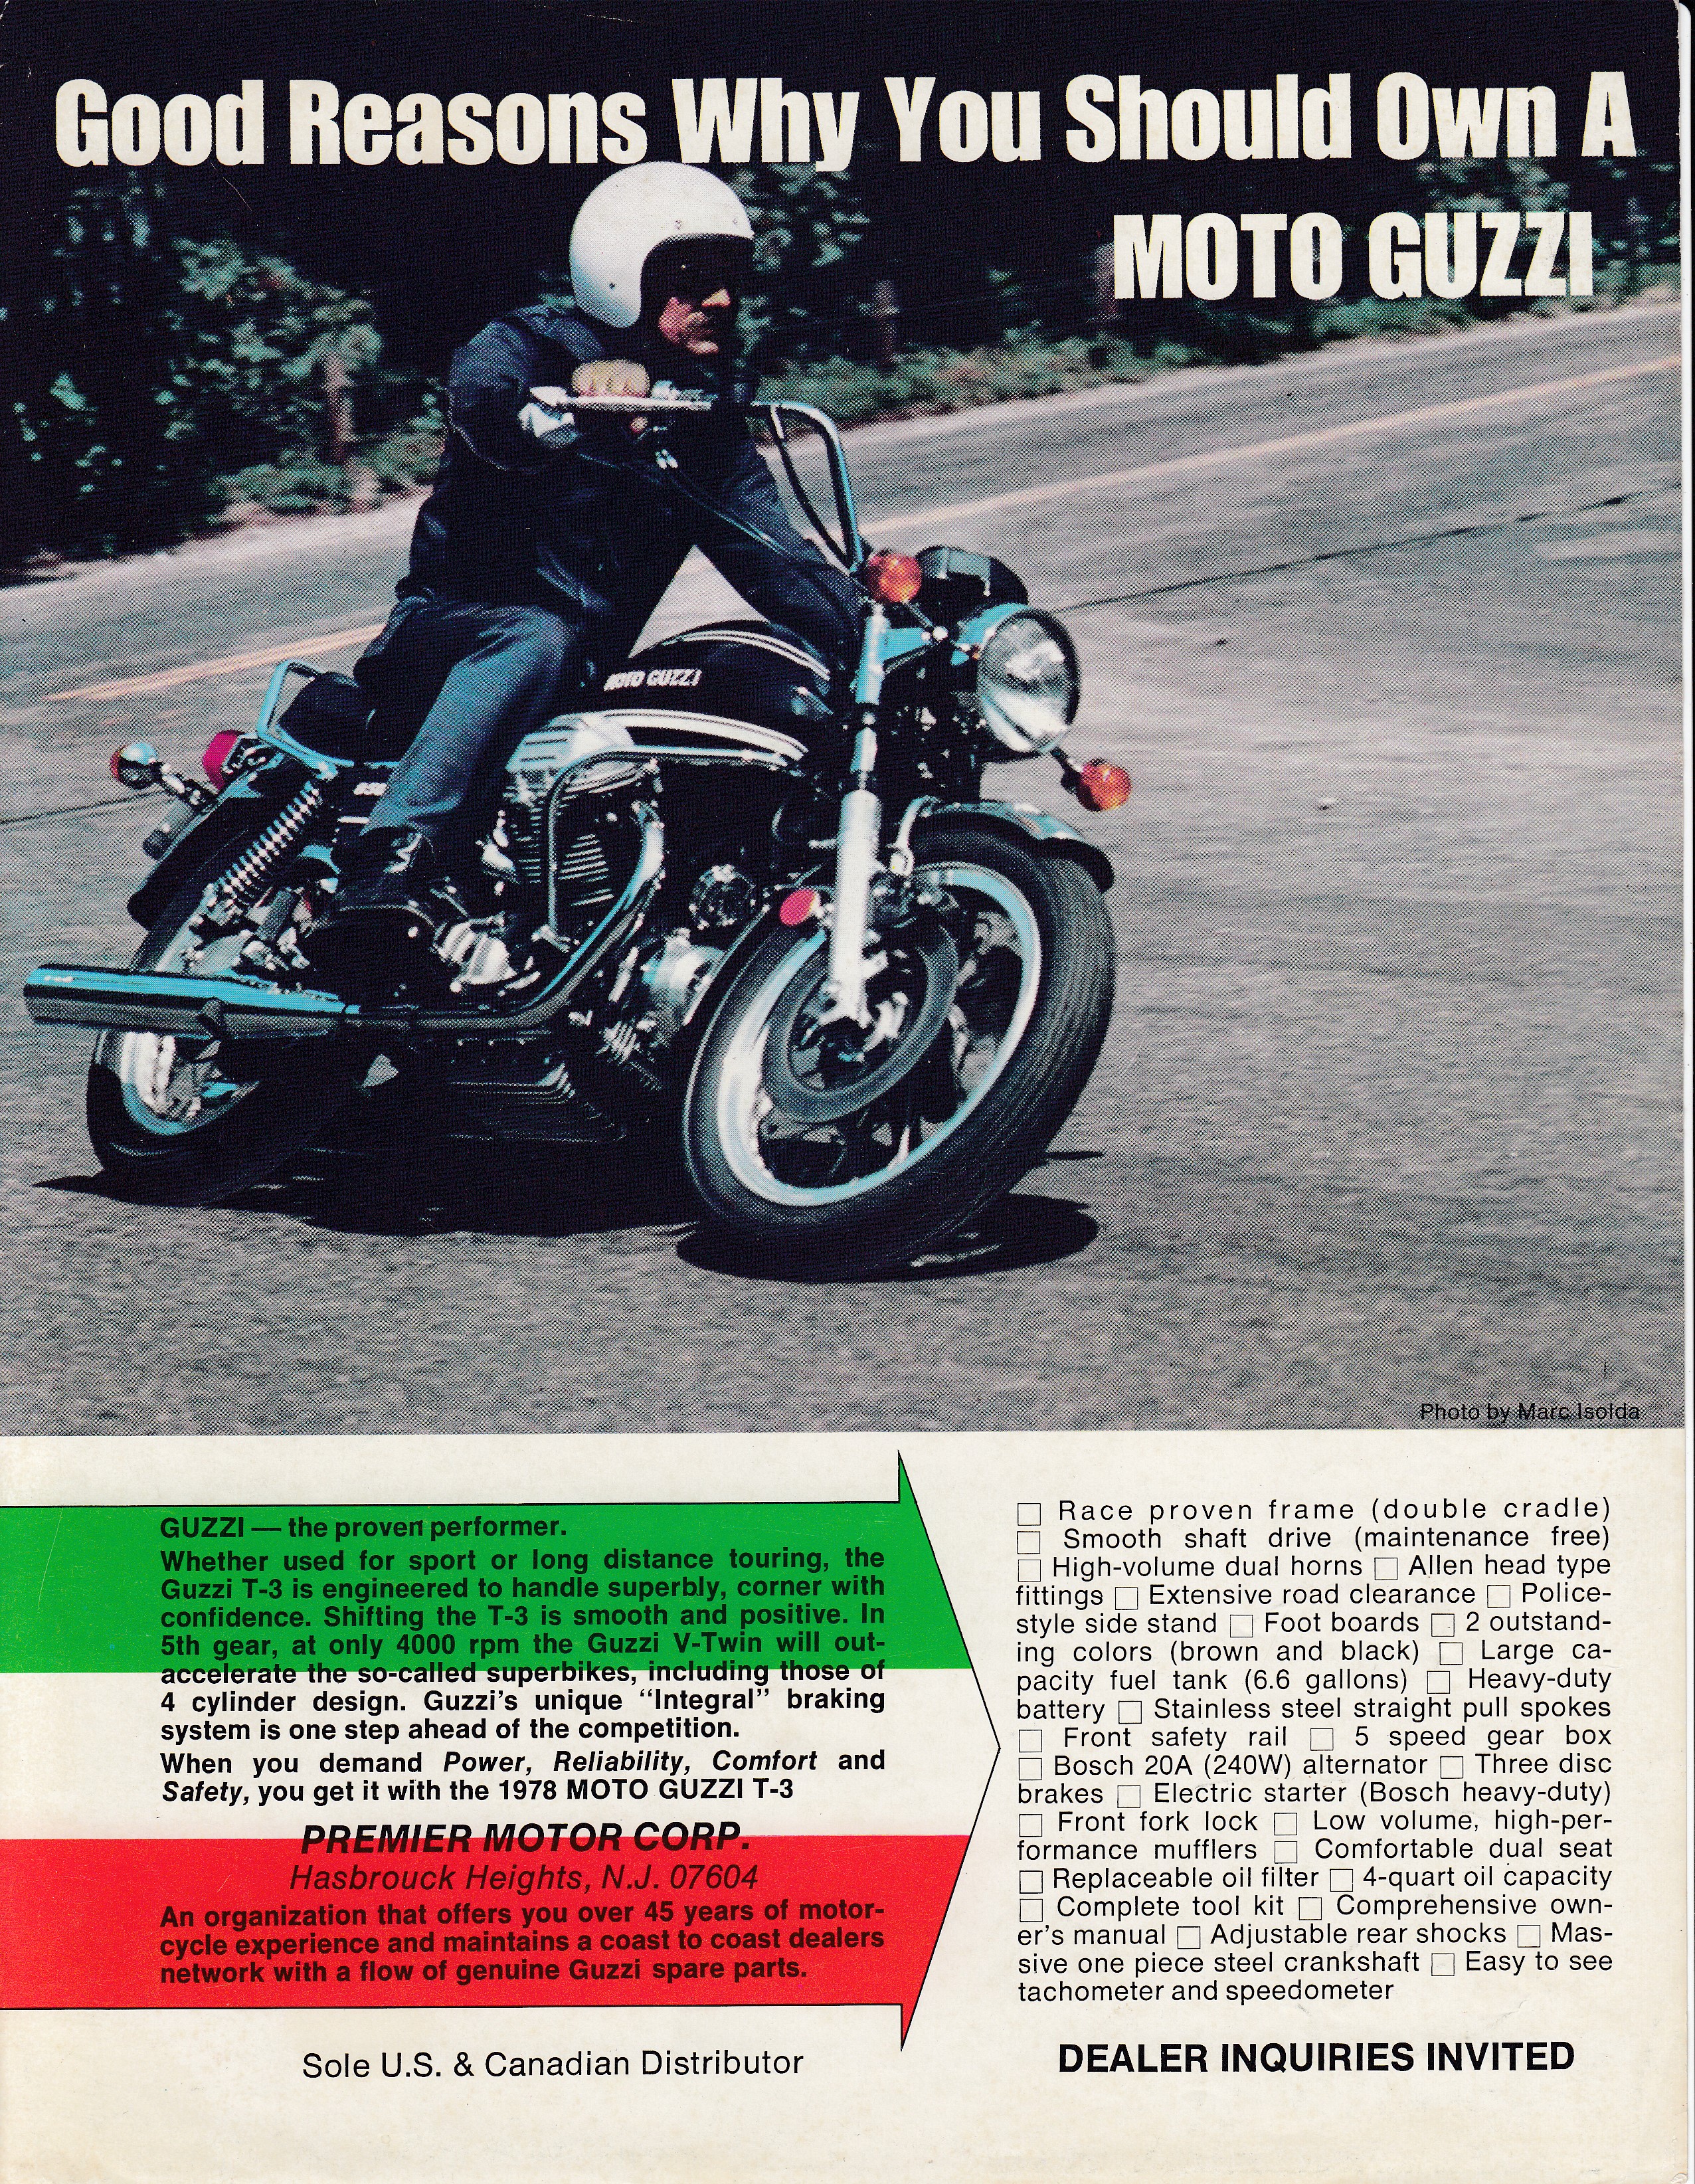 Brochure - Moto Guzzi Good reasons why you should own a Moto Guzzi